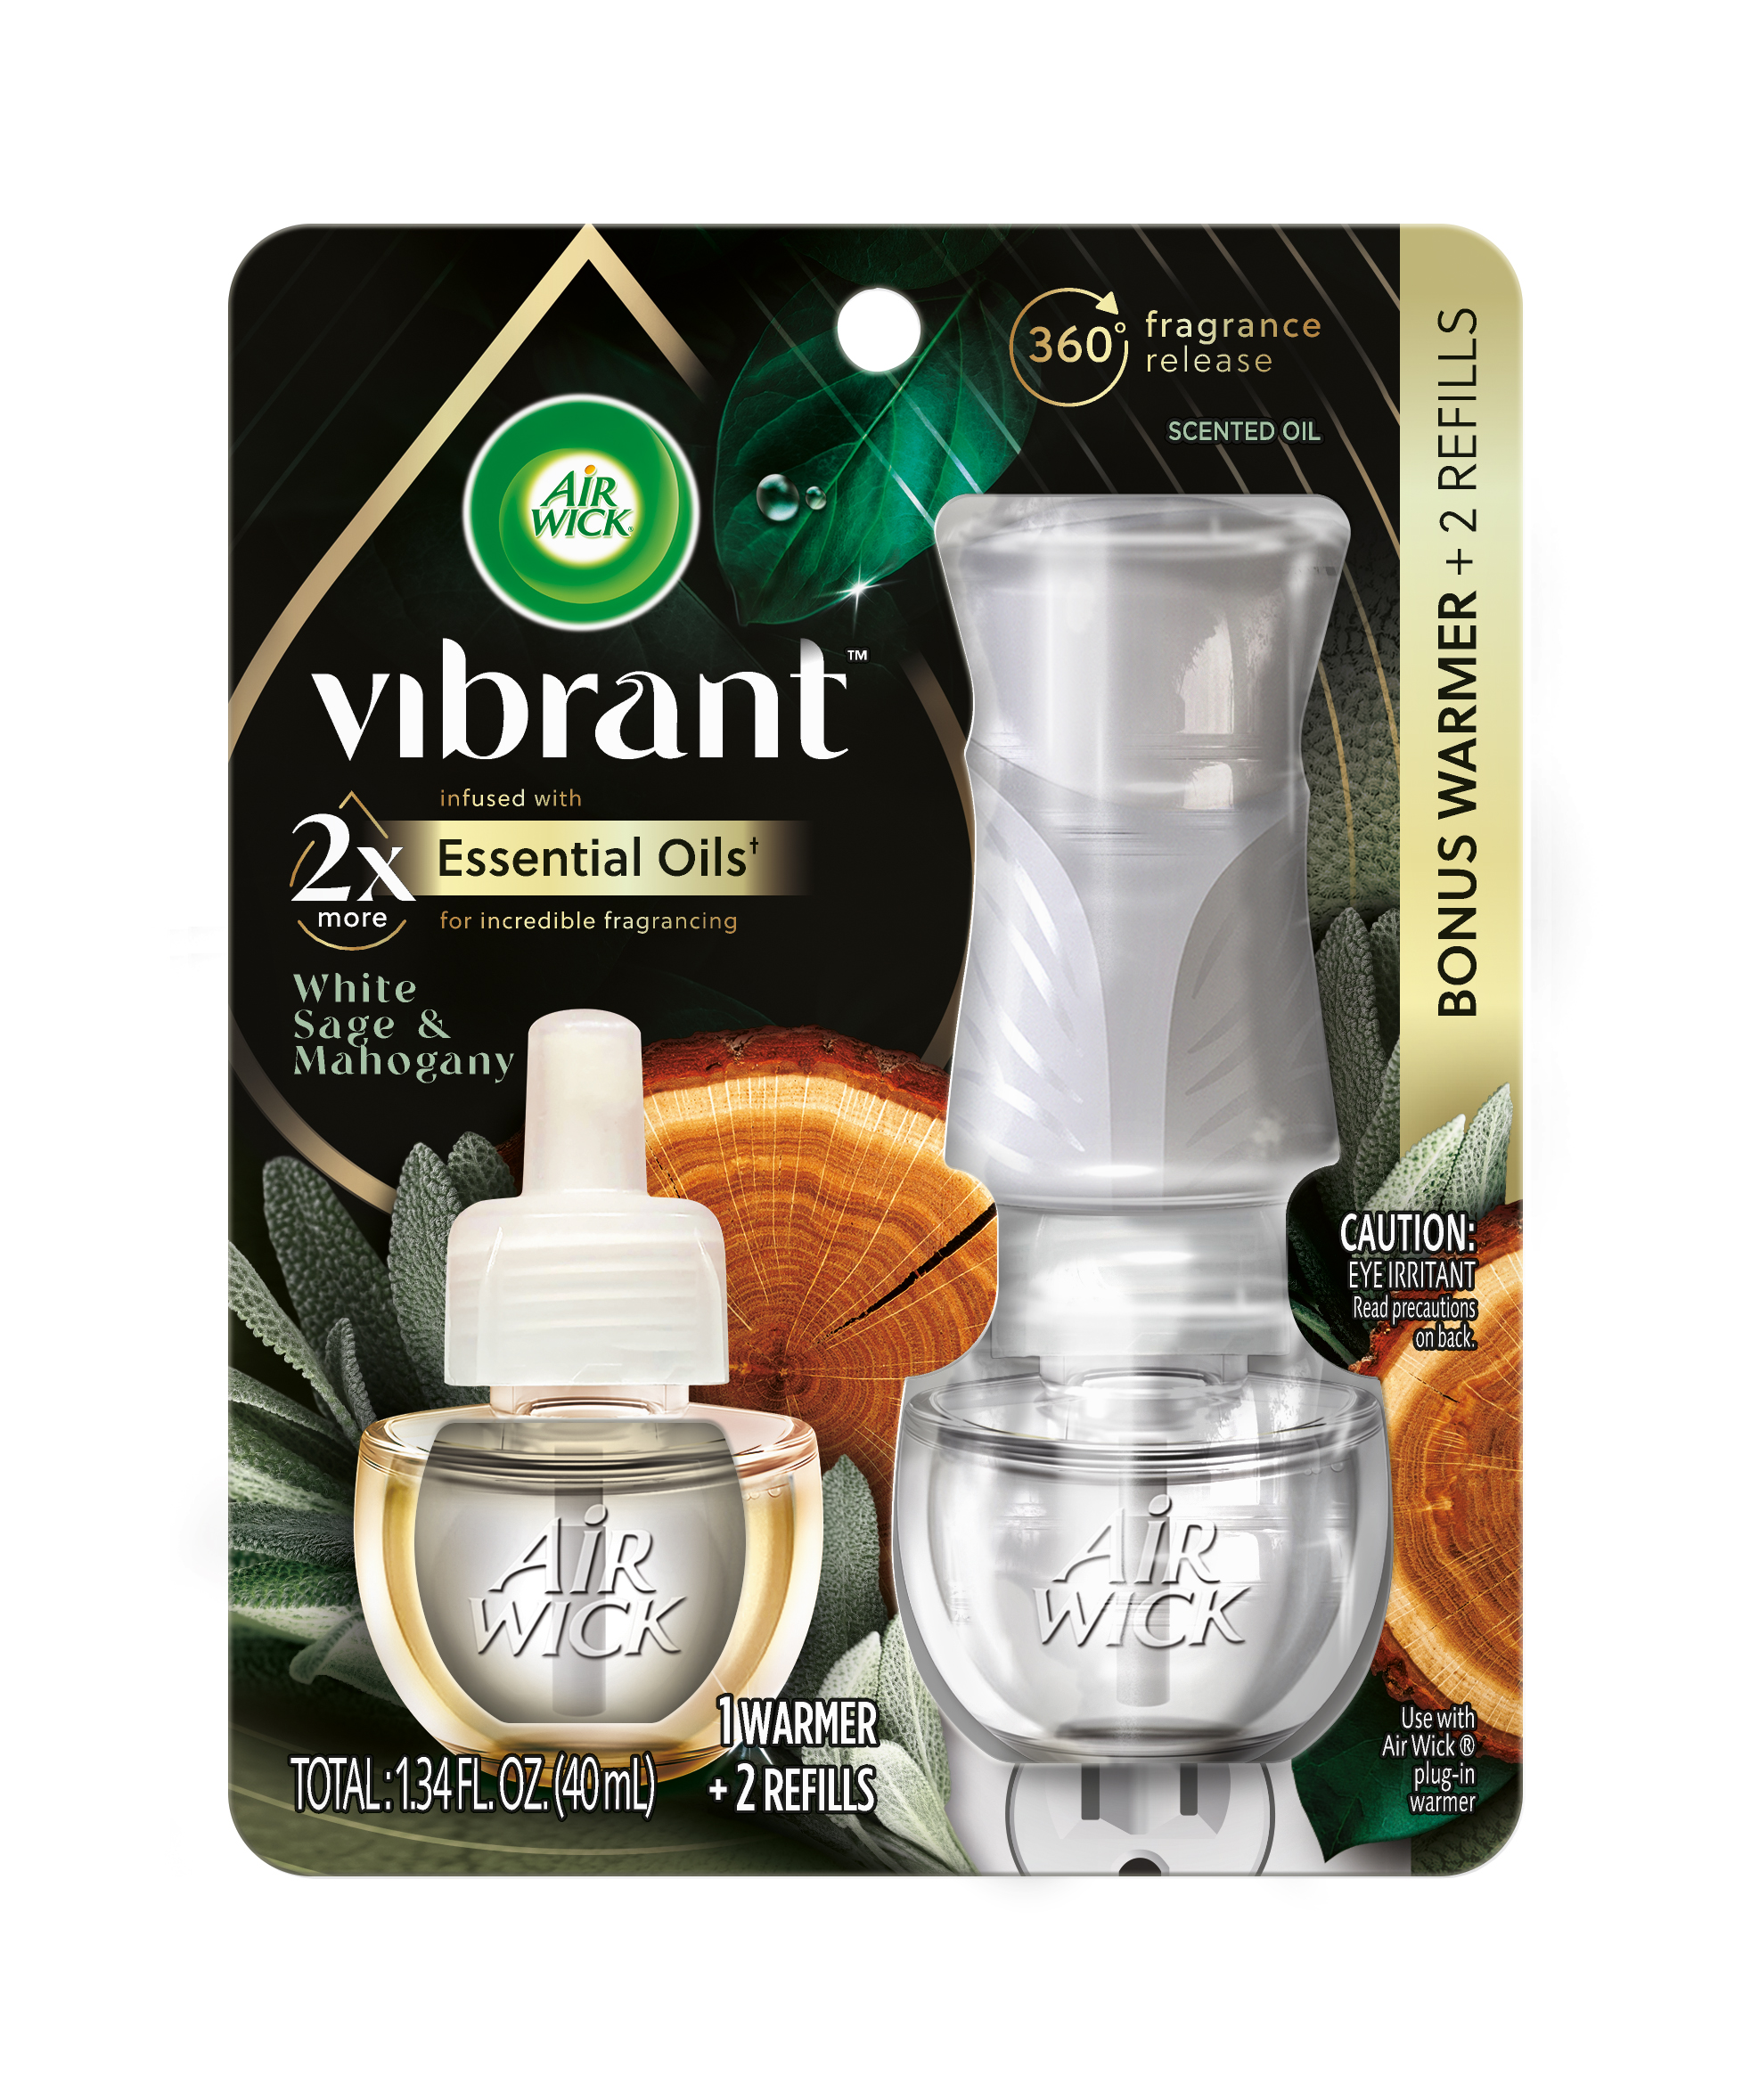 Air Wick Essential Oils Apple Cinnamon Medley Fragrance Diffuser 0.67 Fl Oz  Blister Pack, Solid & Plug-In Air Fresheners